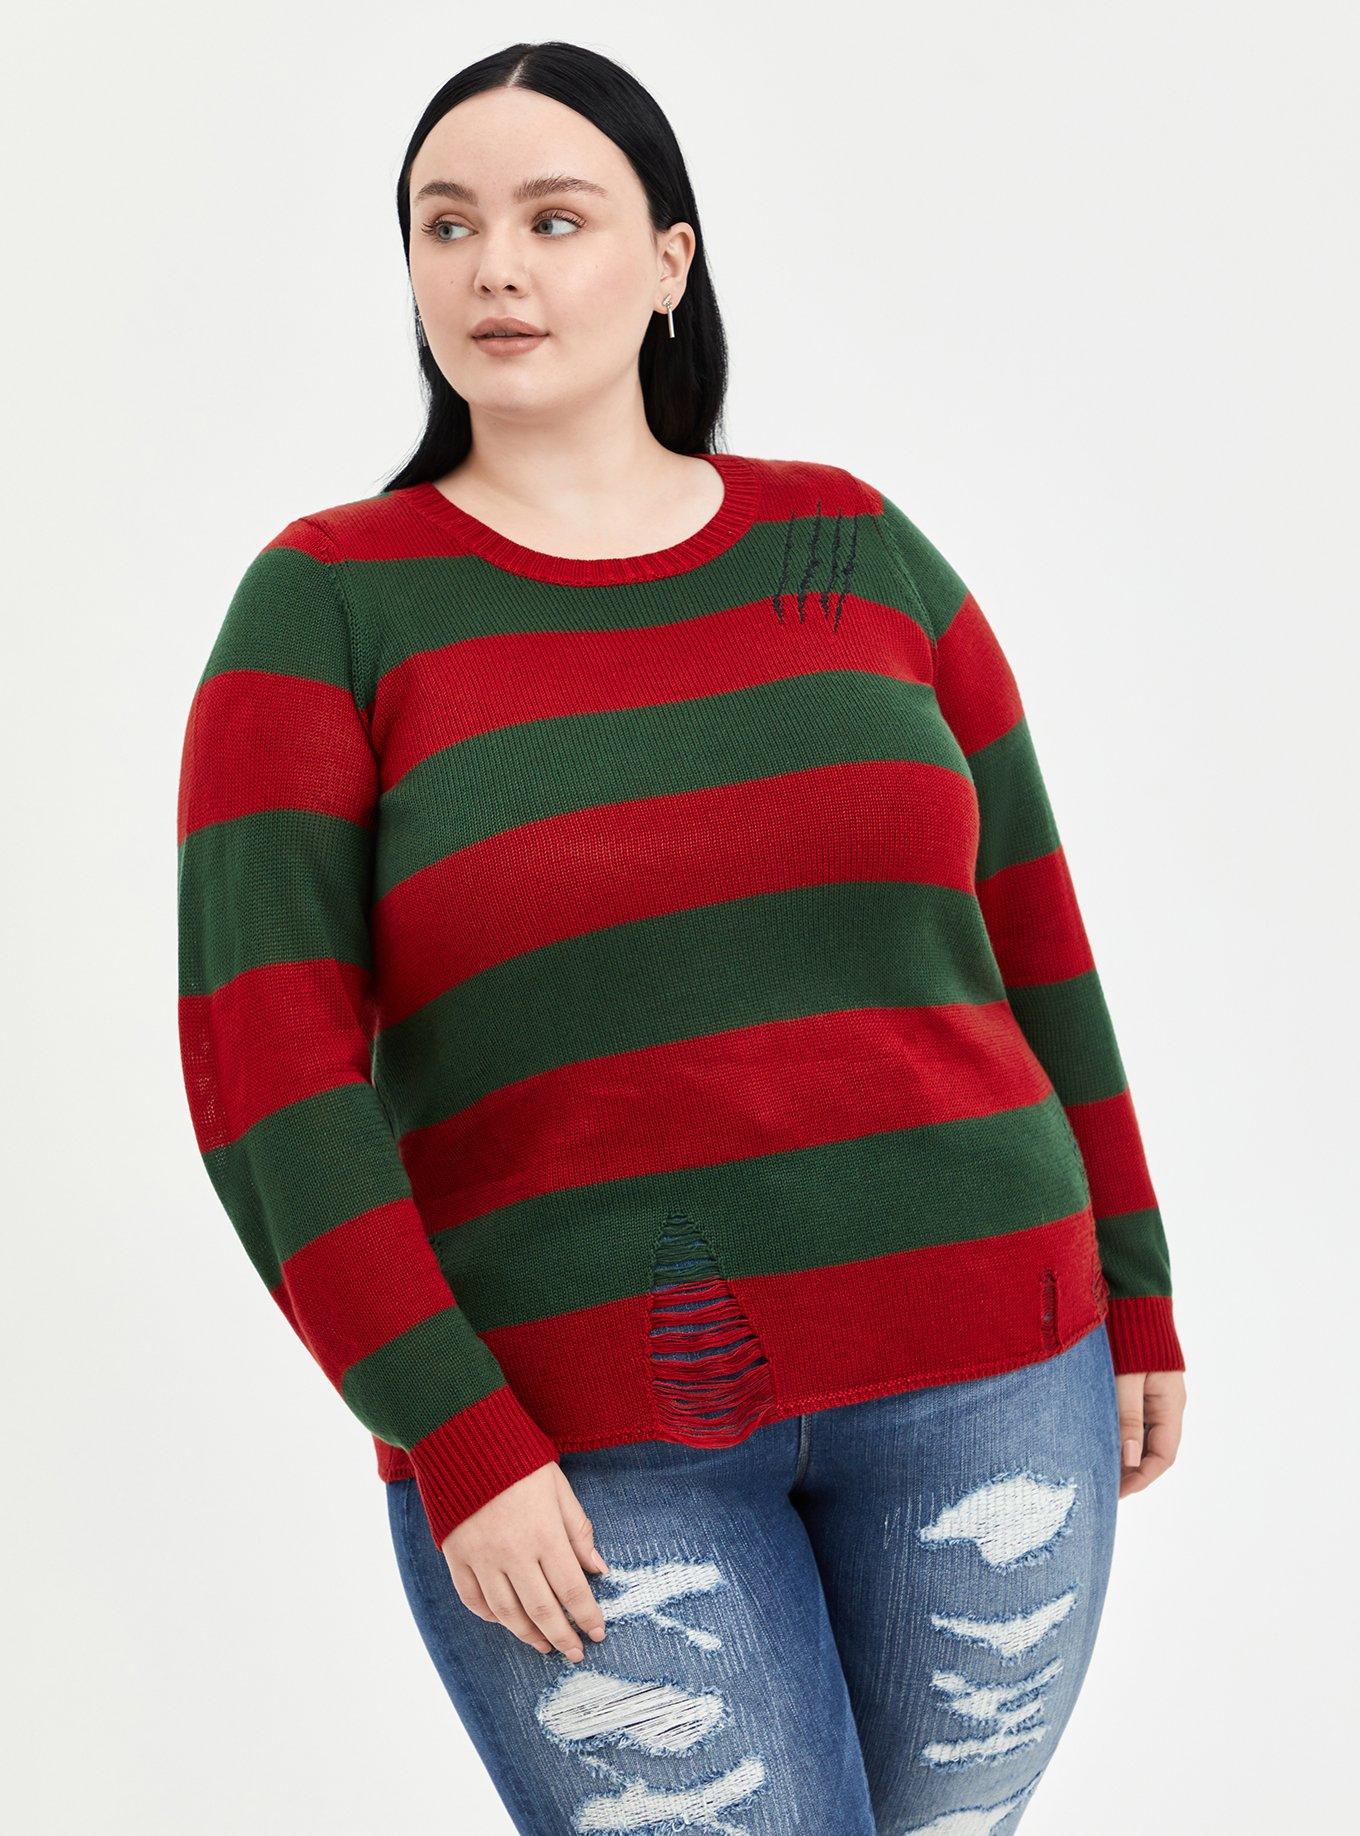 Plus Size - Warner Bros. A Nightmare On Elm Street Destructed Sweater -  Freddy Krueger Stripes Red & Green - Torrid